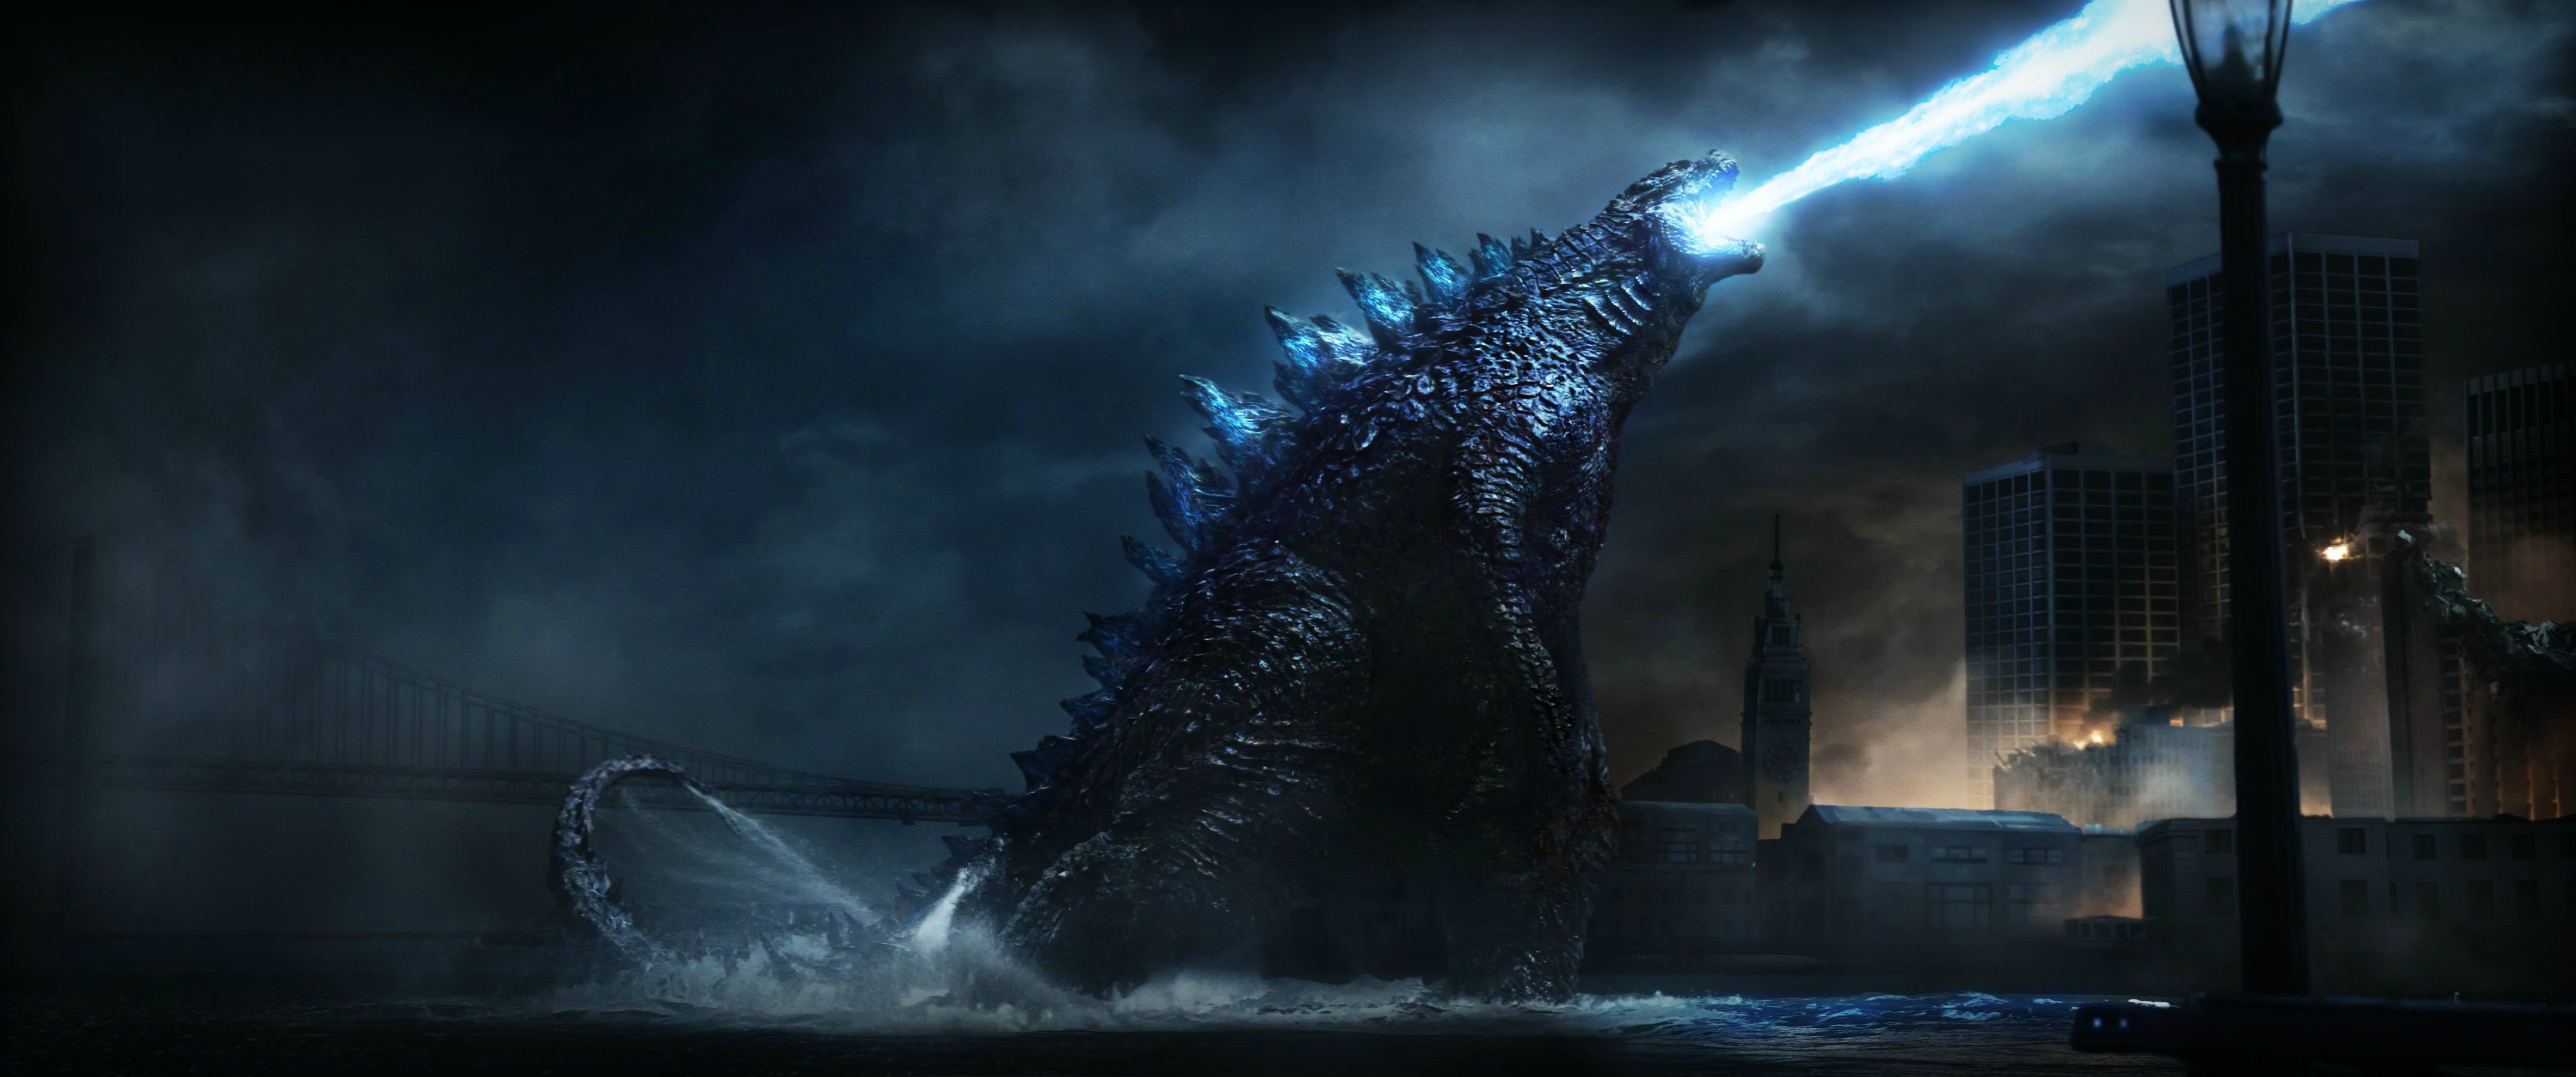 Godzilla uses a line breath weapon.